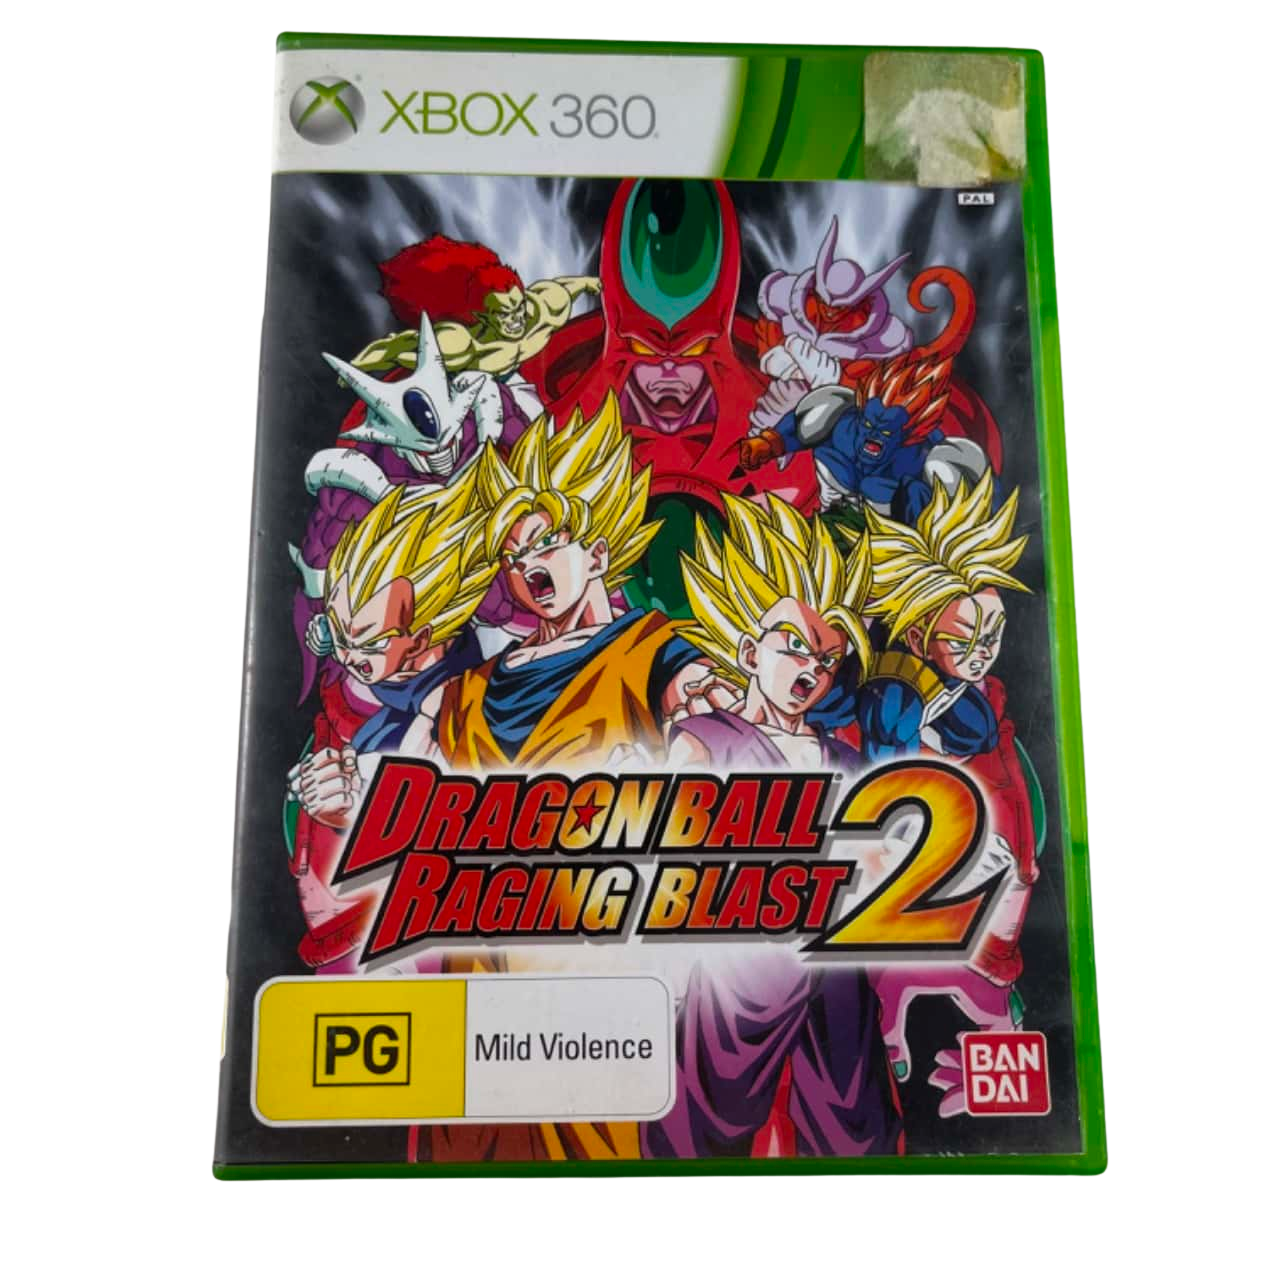 Game | Microsoft Xbox 360 | Dragon Ball Racing Blast 2 (Limited Edition)